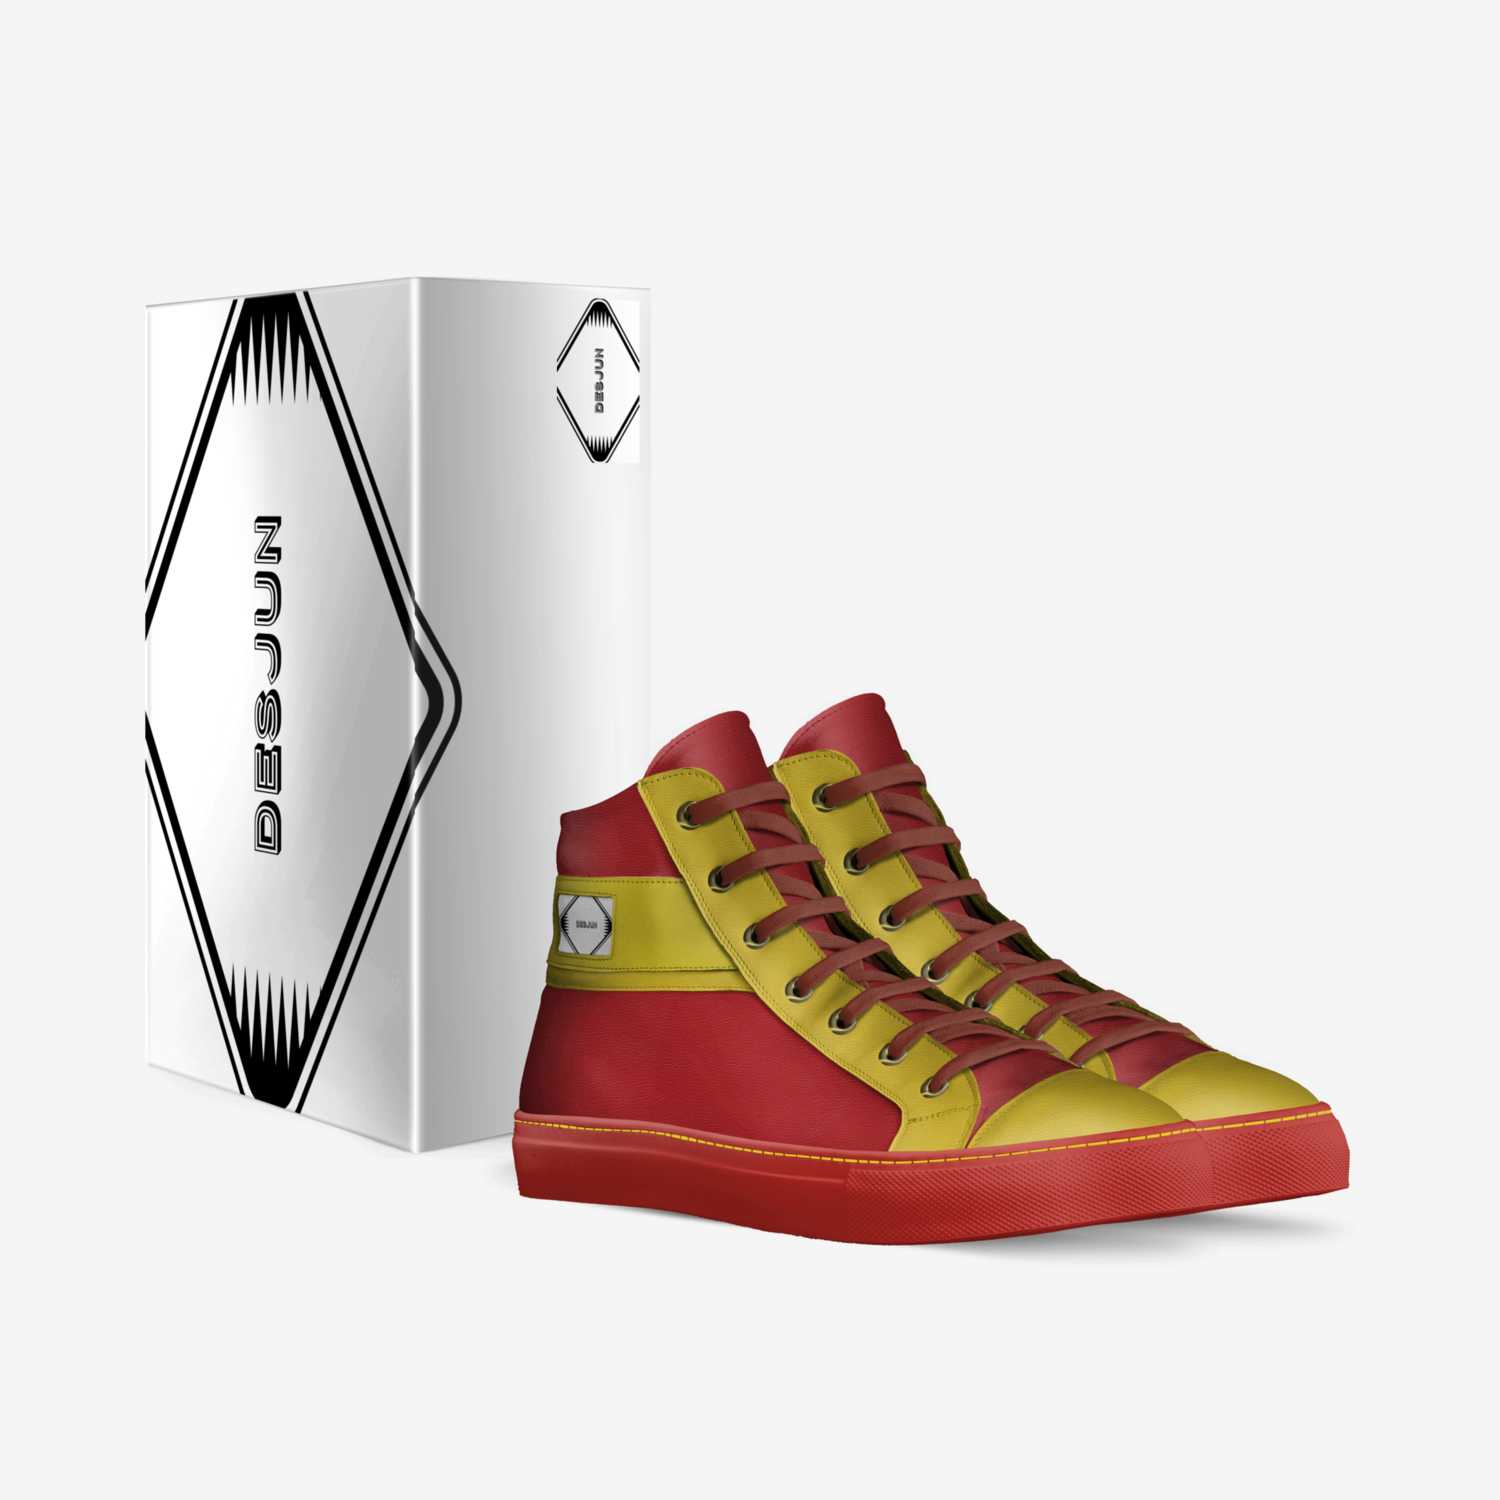 Desjun custom made in Italy shoes by Junior Desir | Box view